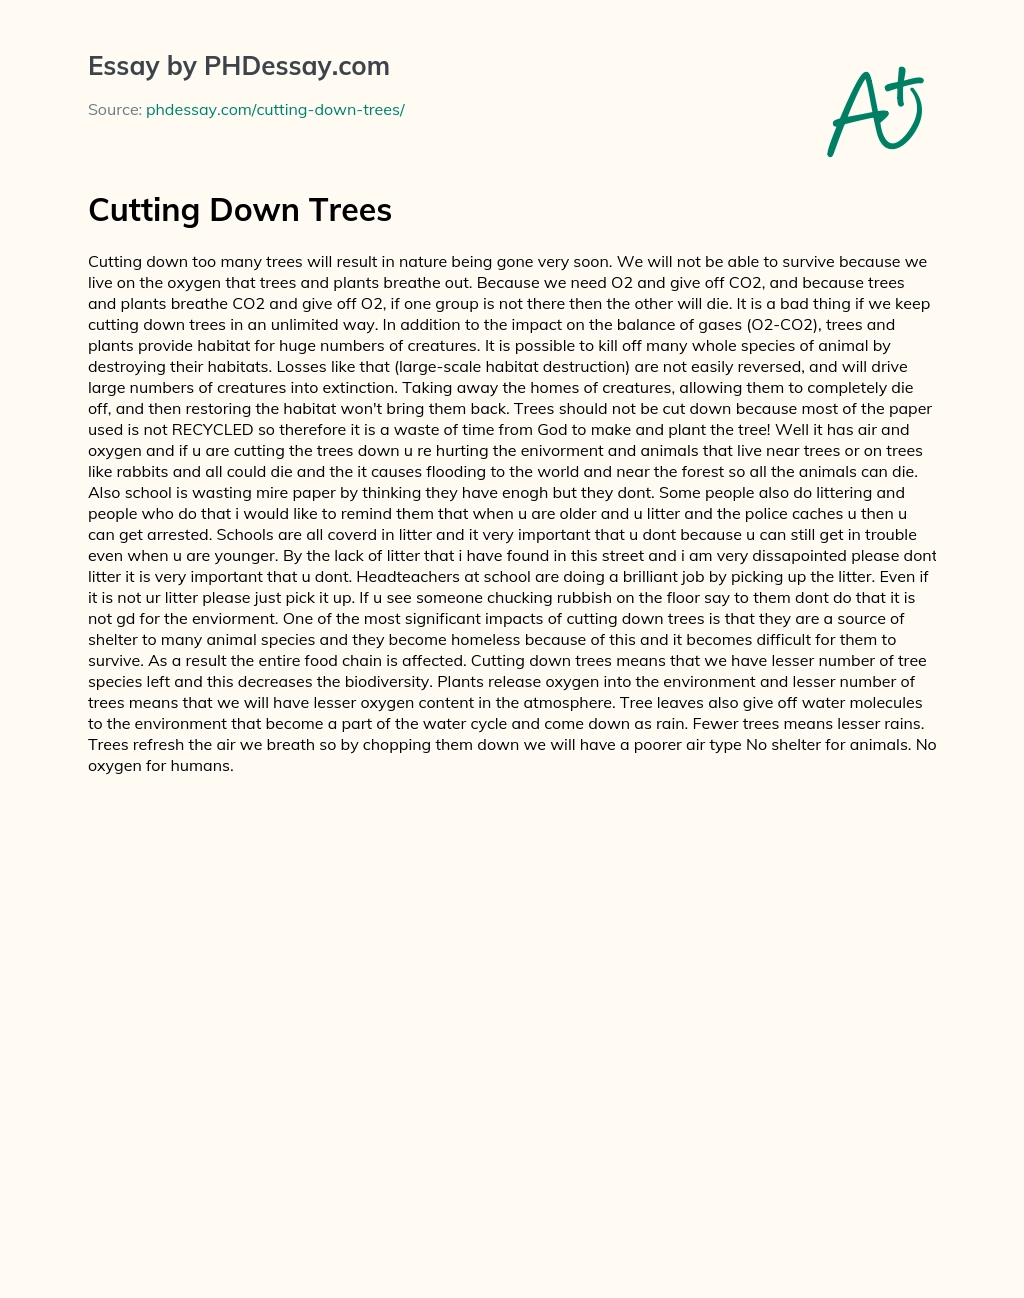 Cutting Down Trees essay